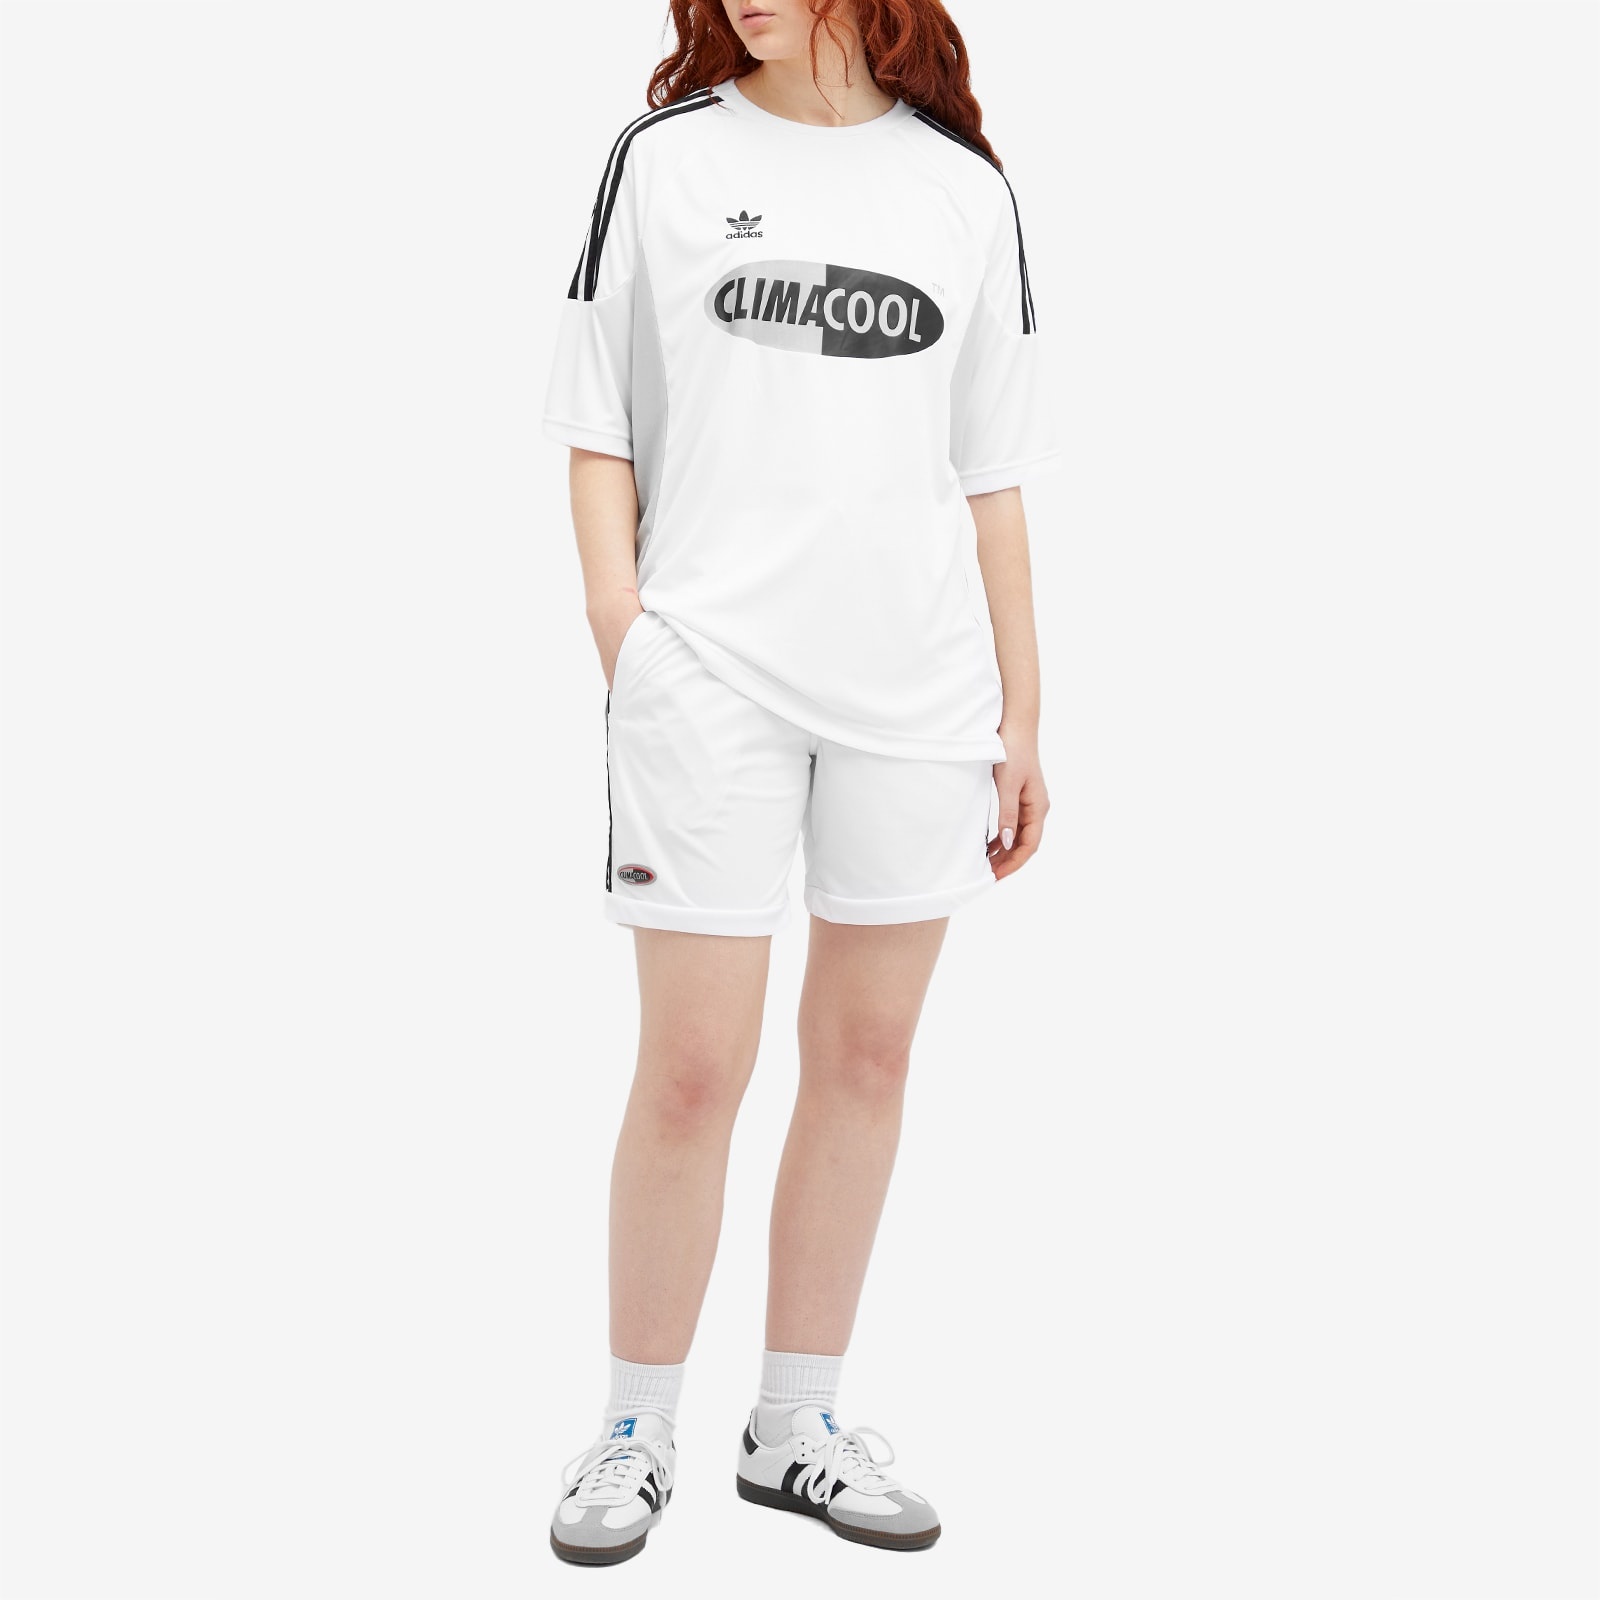 Adidas Climacool Shorts - 5